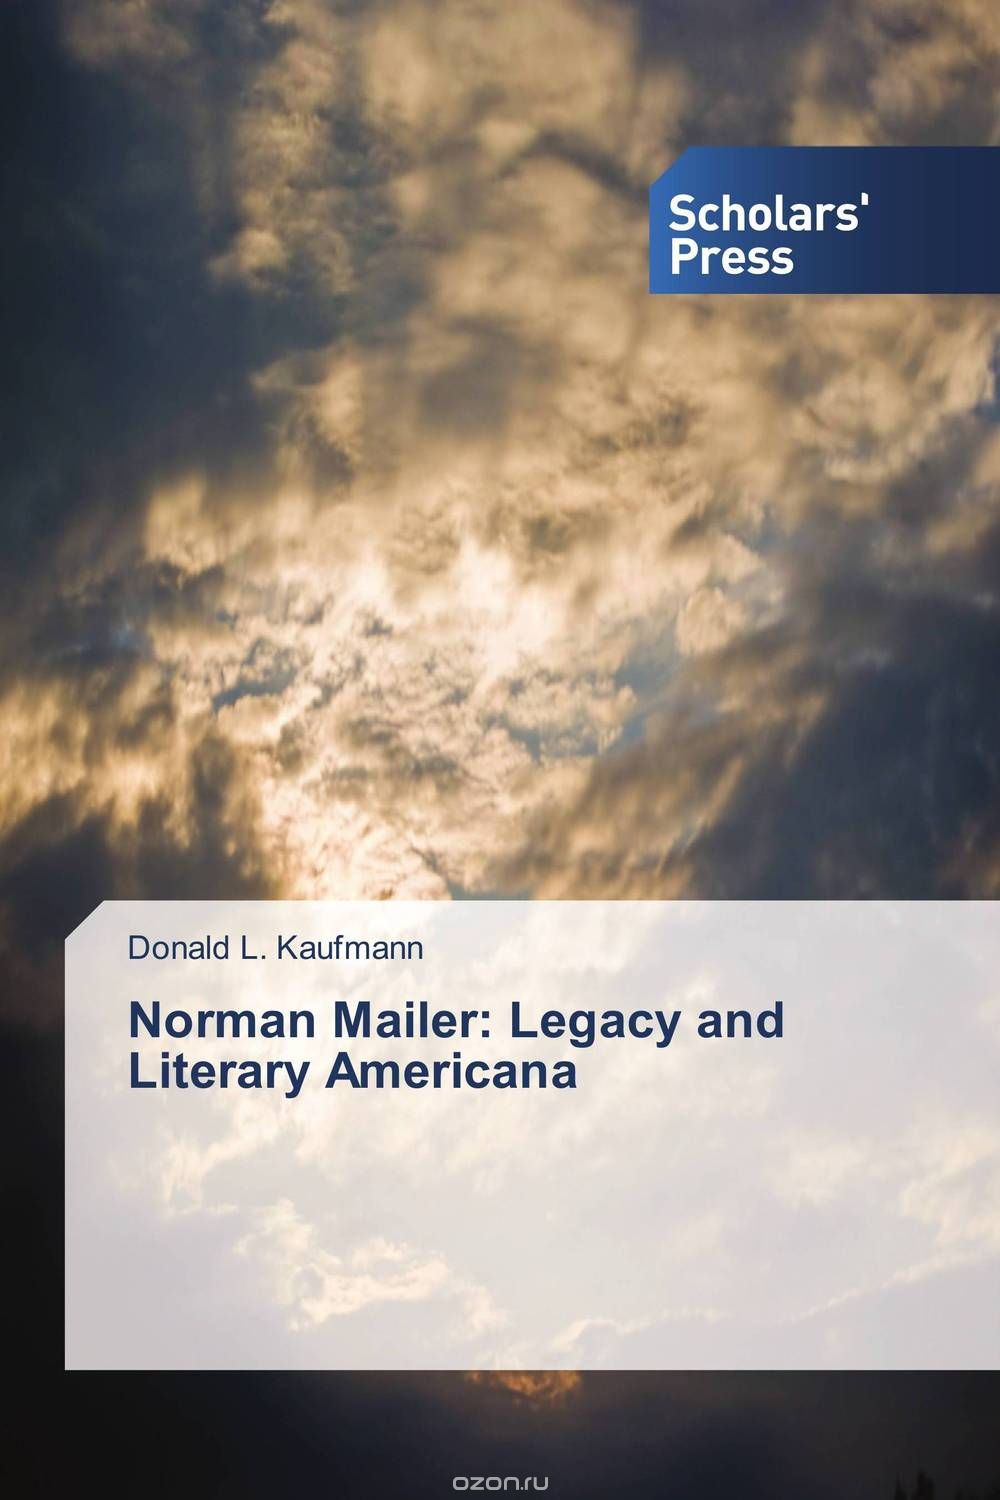 Скачать книгу "Norman Mailer: Legacy and Literary Americana"